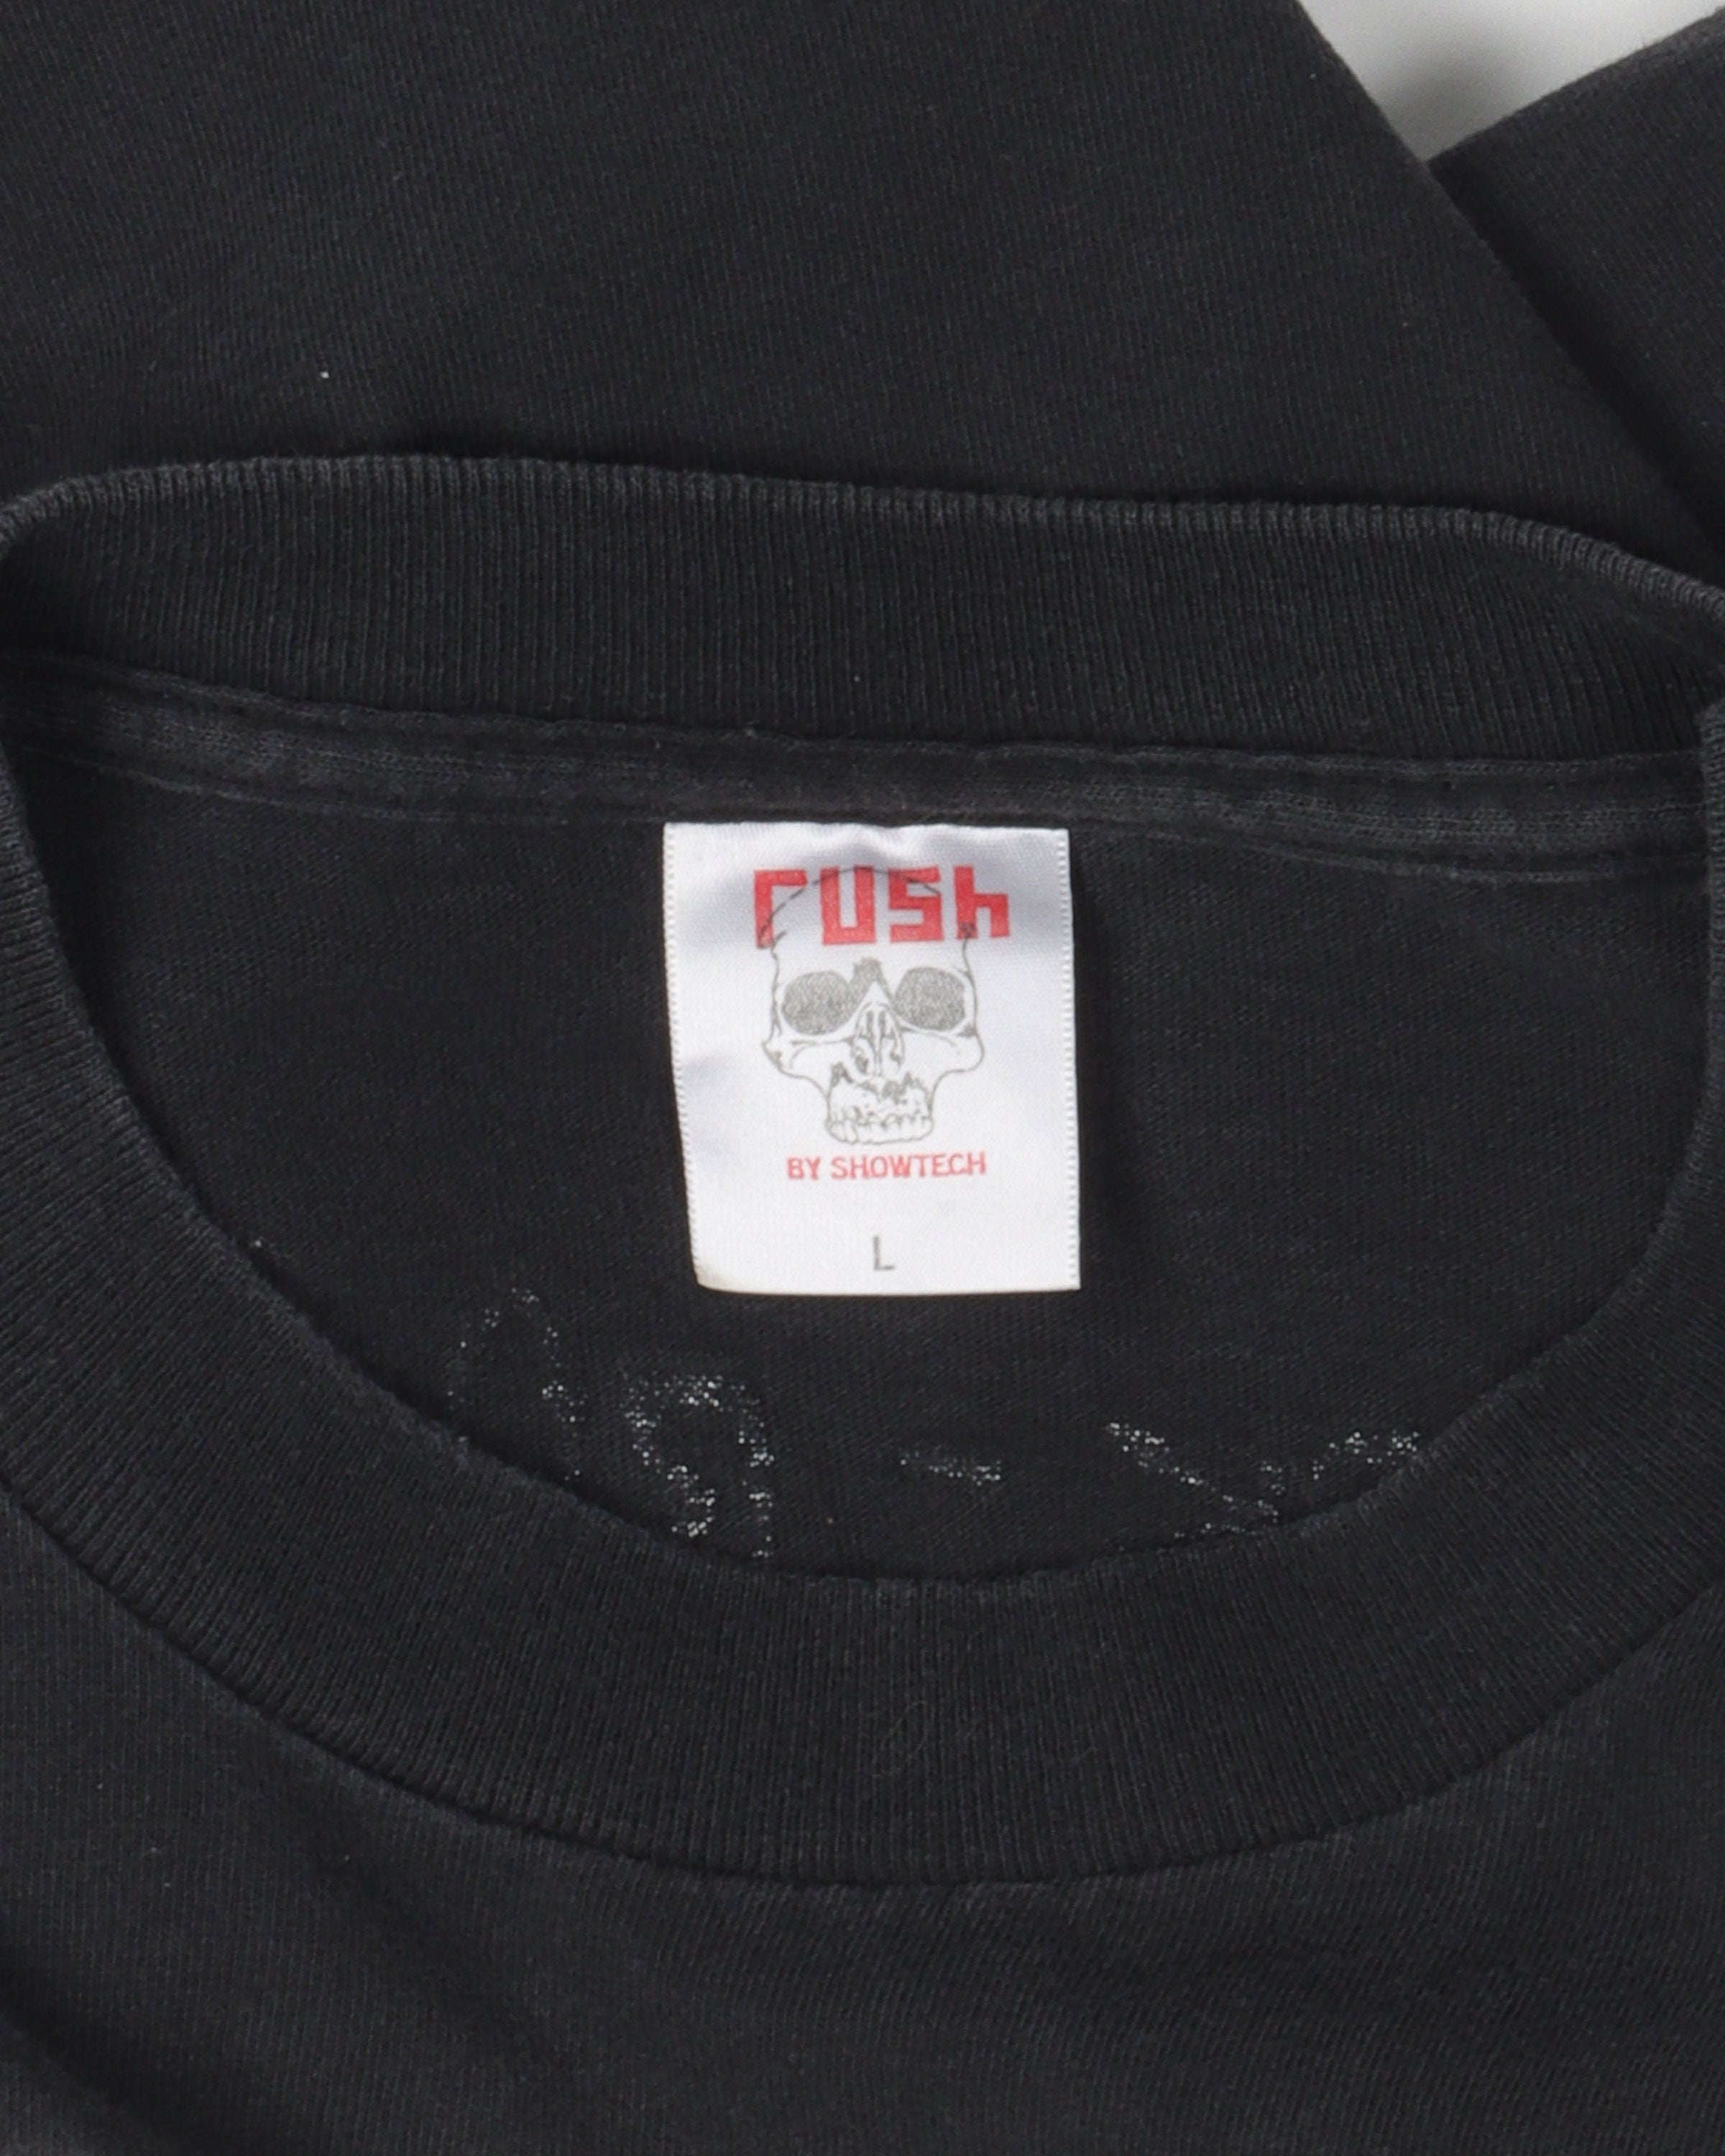 Rush Roll The Bones Pushead T-Shirt